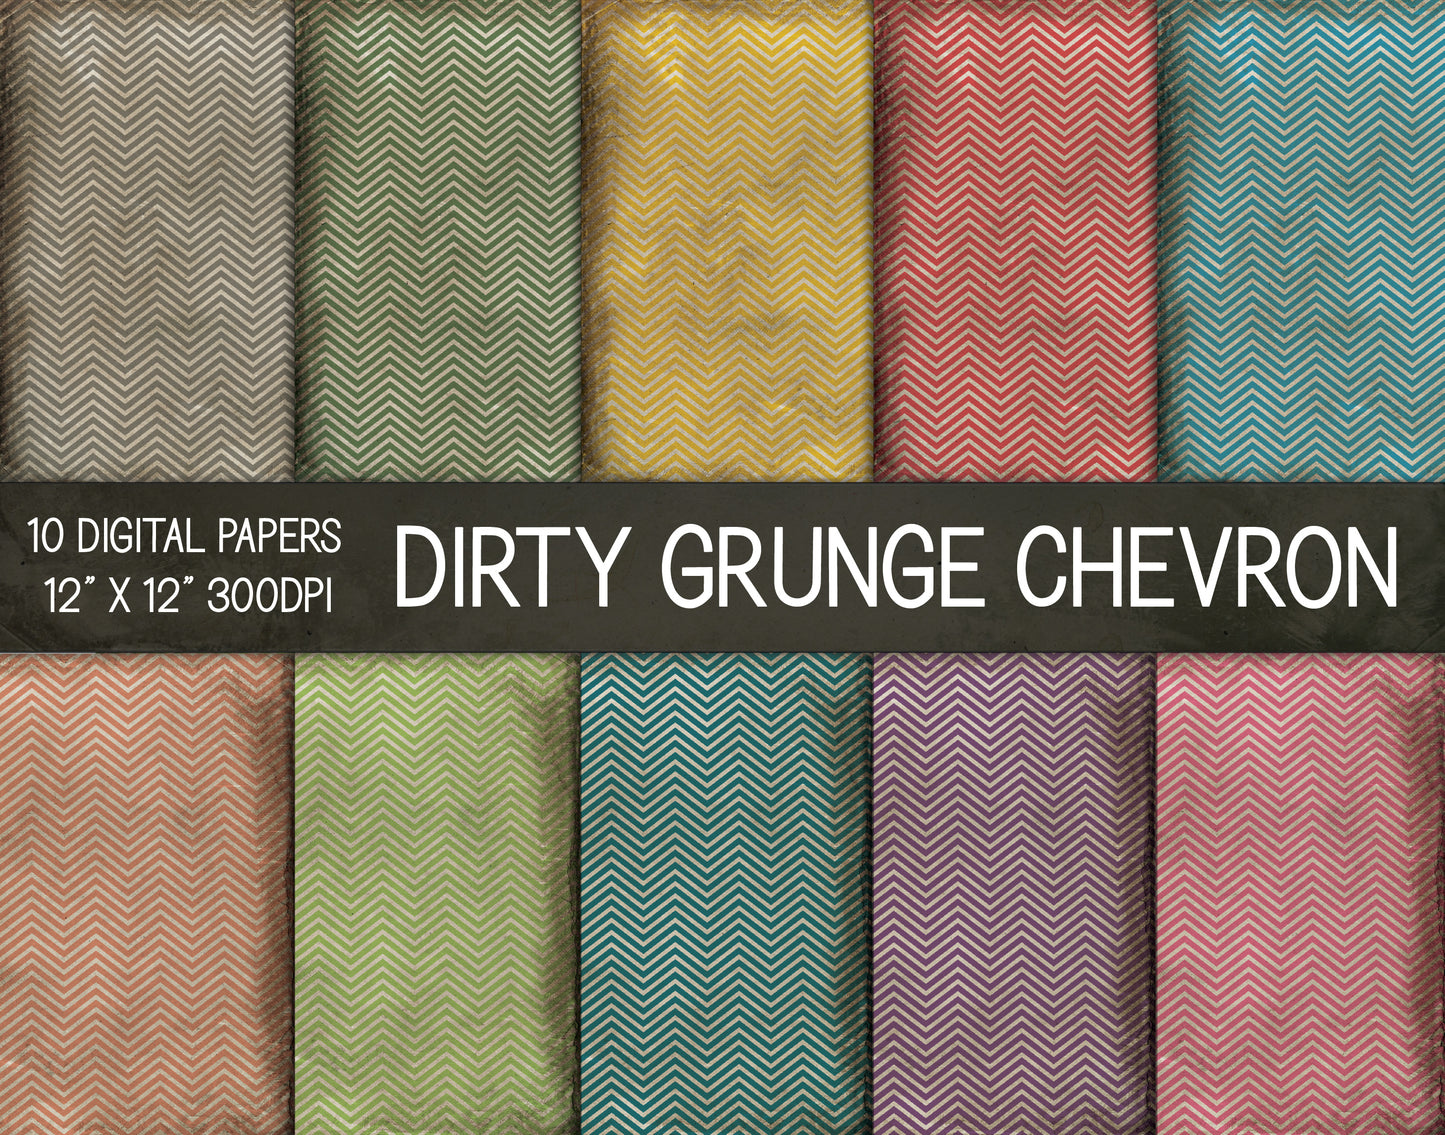 Dirty Grunge Chevron Digital Papers, Grunge Texture Paper